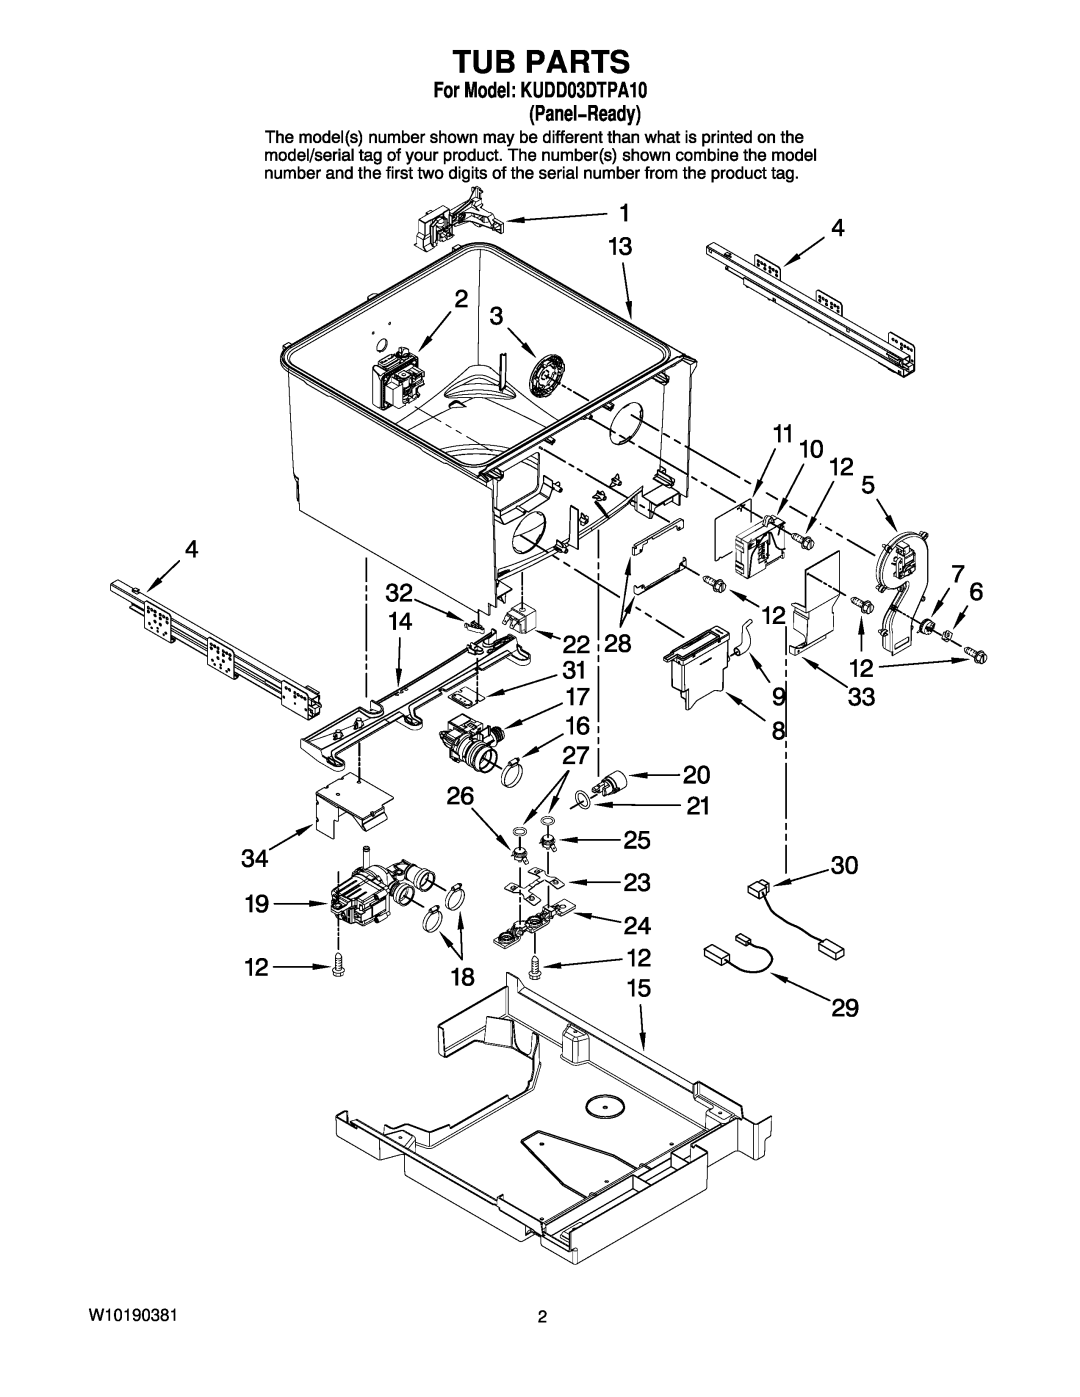 KitchenAid manual Tub Parts, W10190381, For Model KUDD03DTPA10 Panel−Ready 